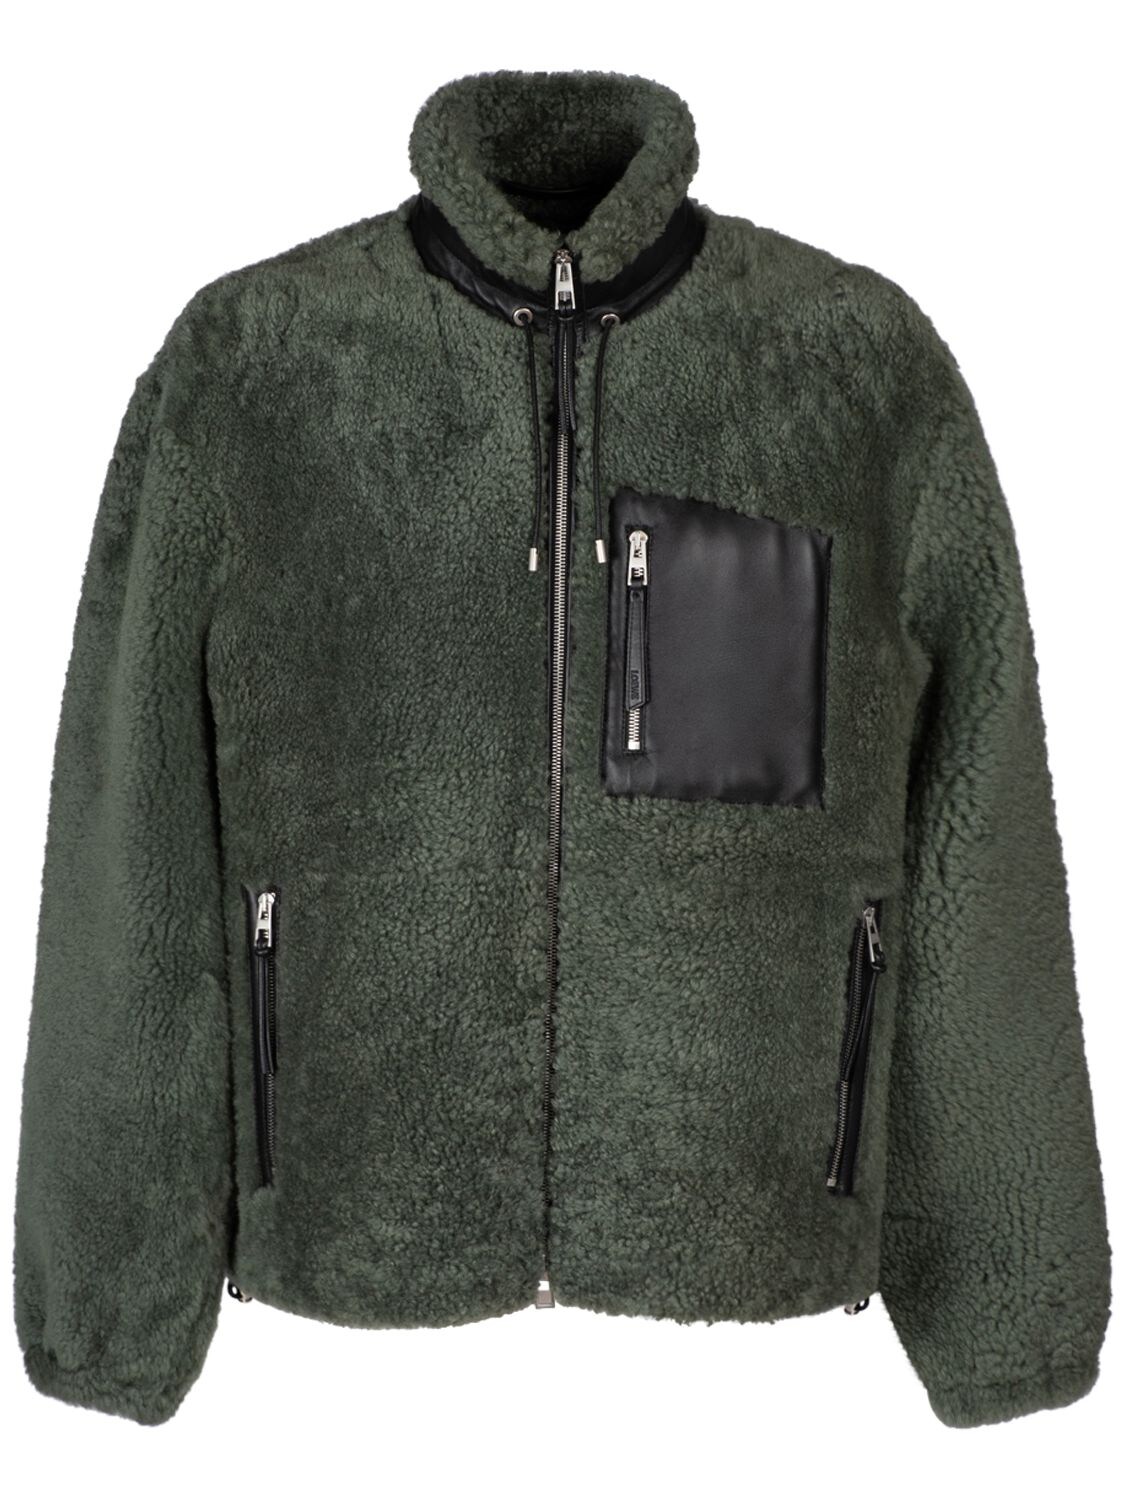 Shearling Jacket W/ Leather Pocket